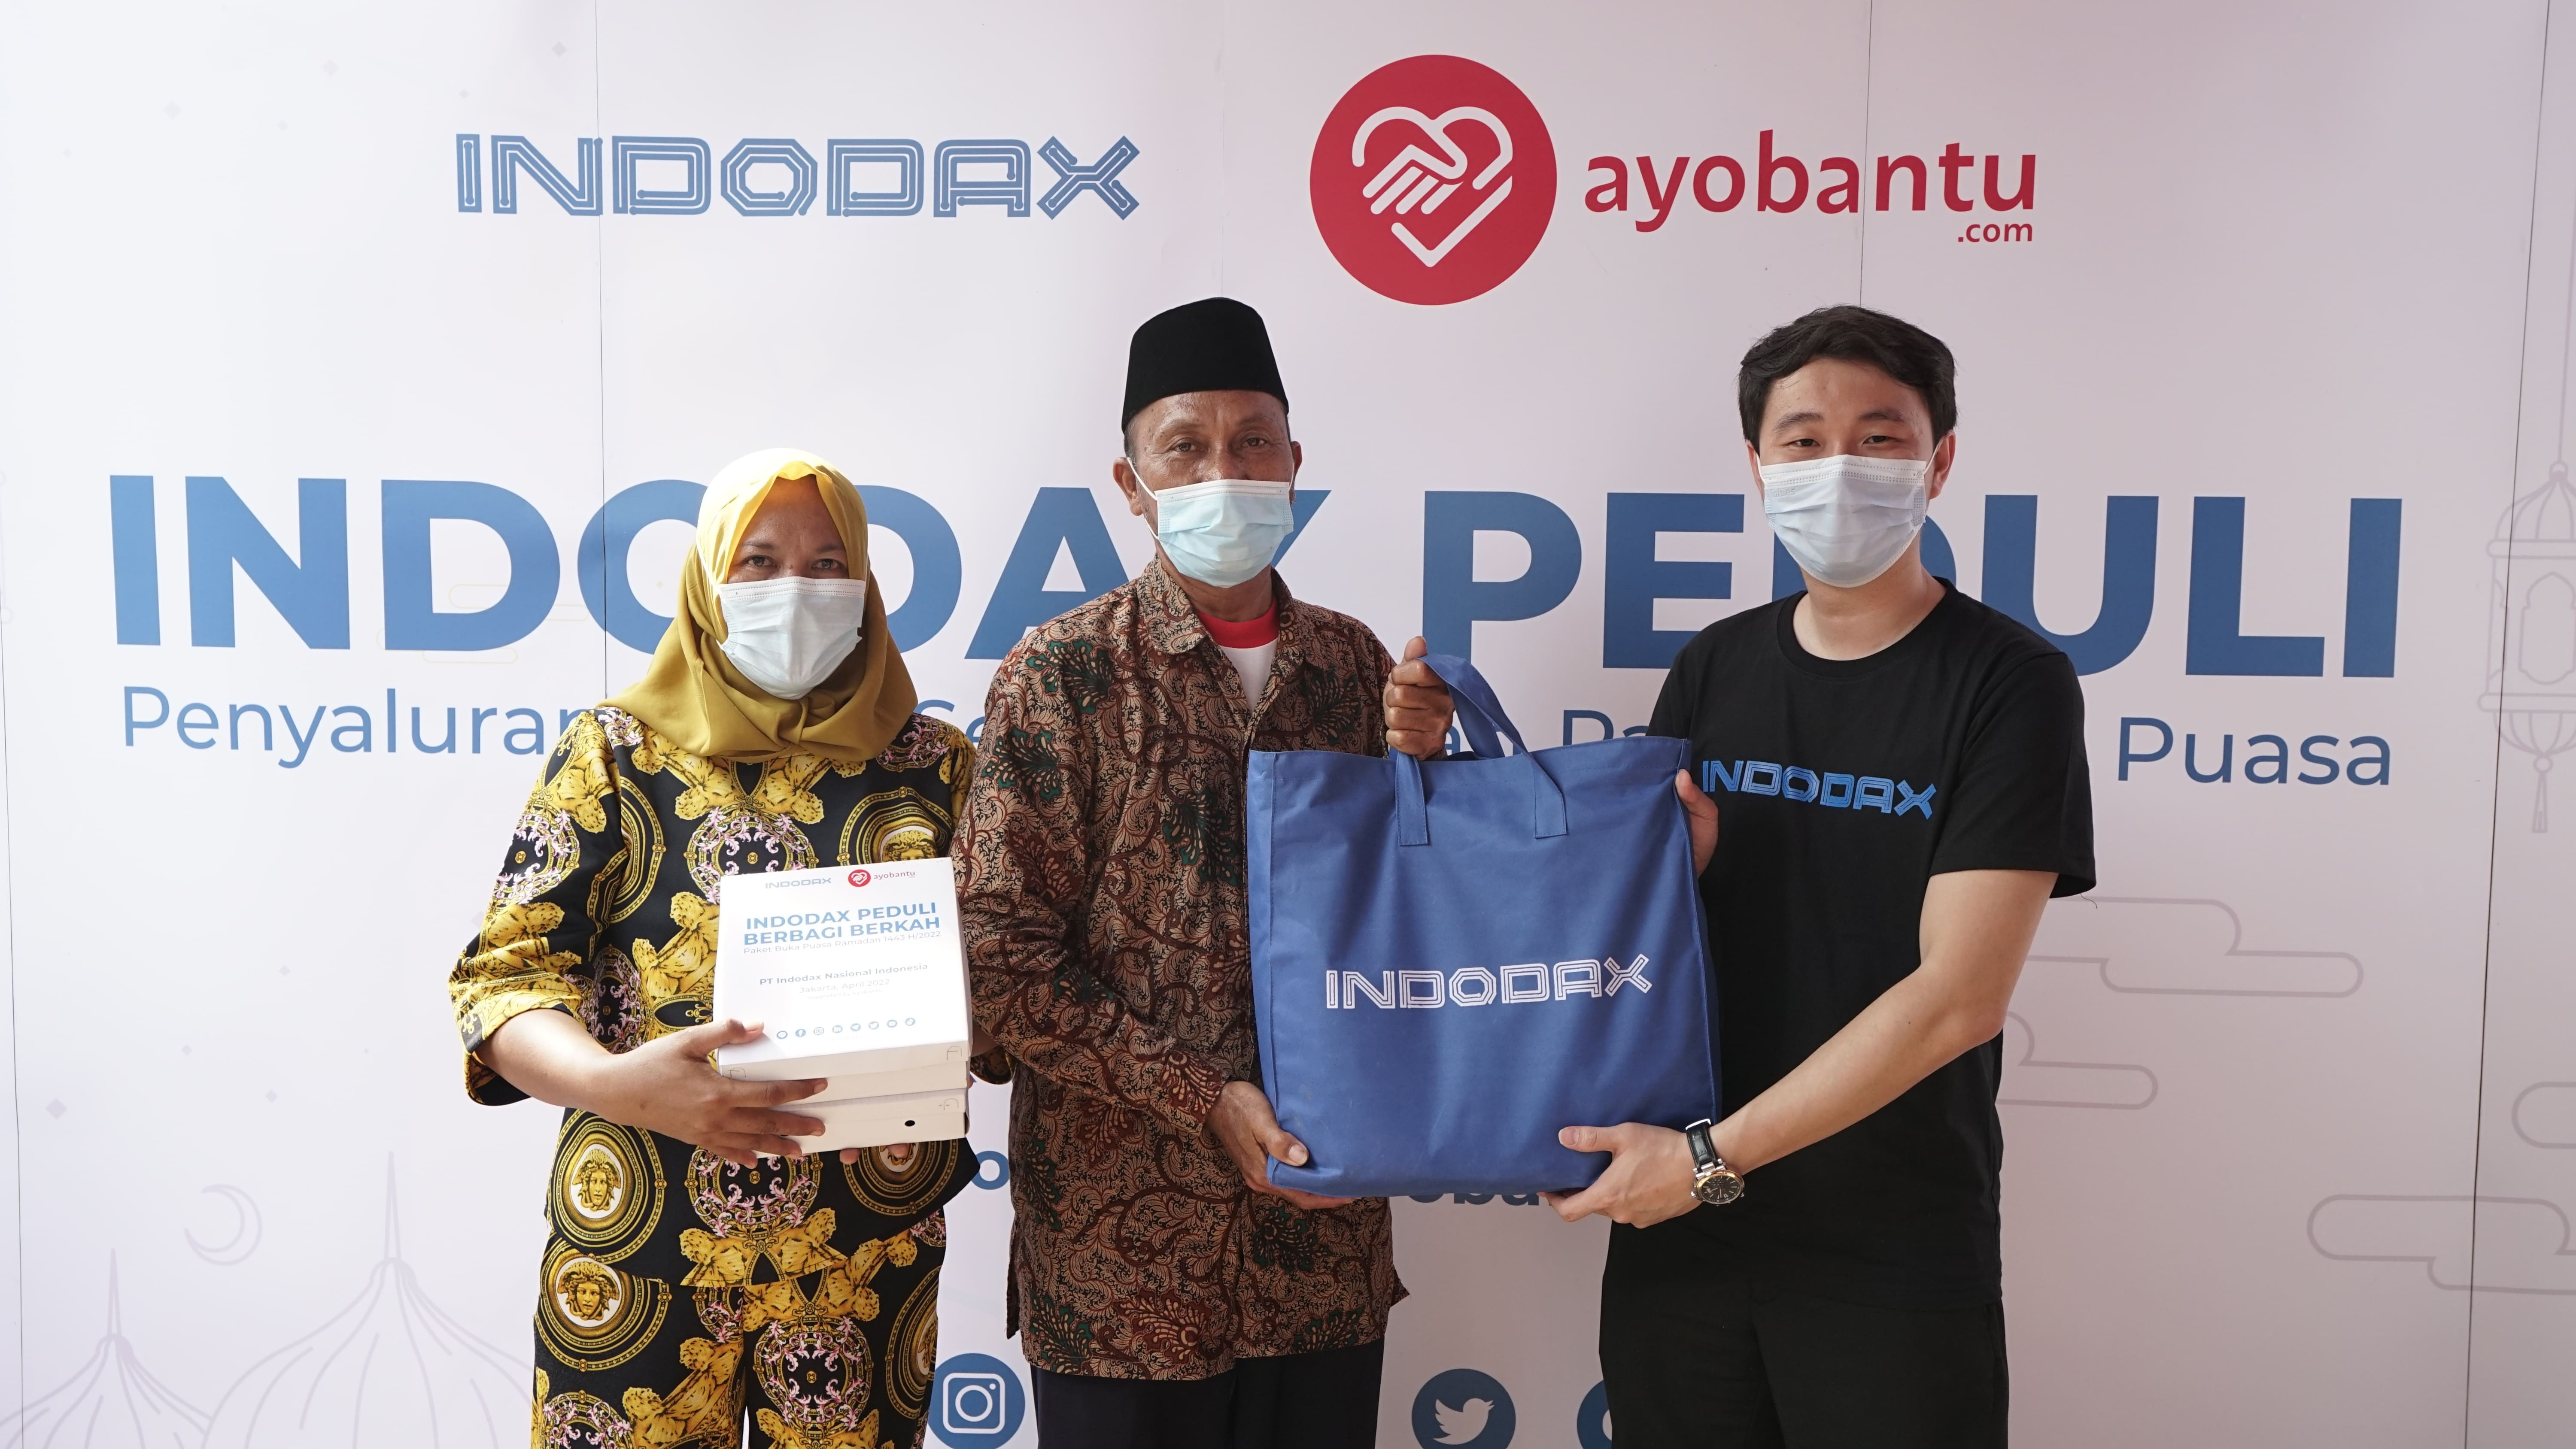 Indodax gandeng Ayobantu adakan program CSR ramadan